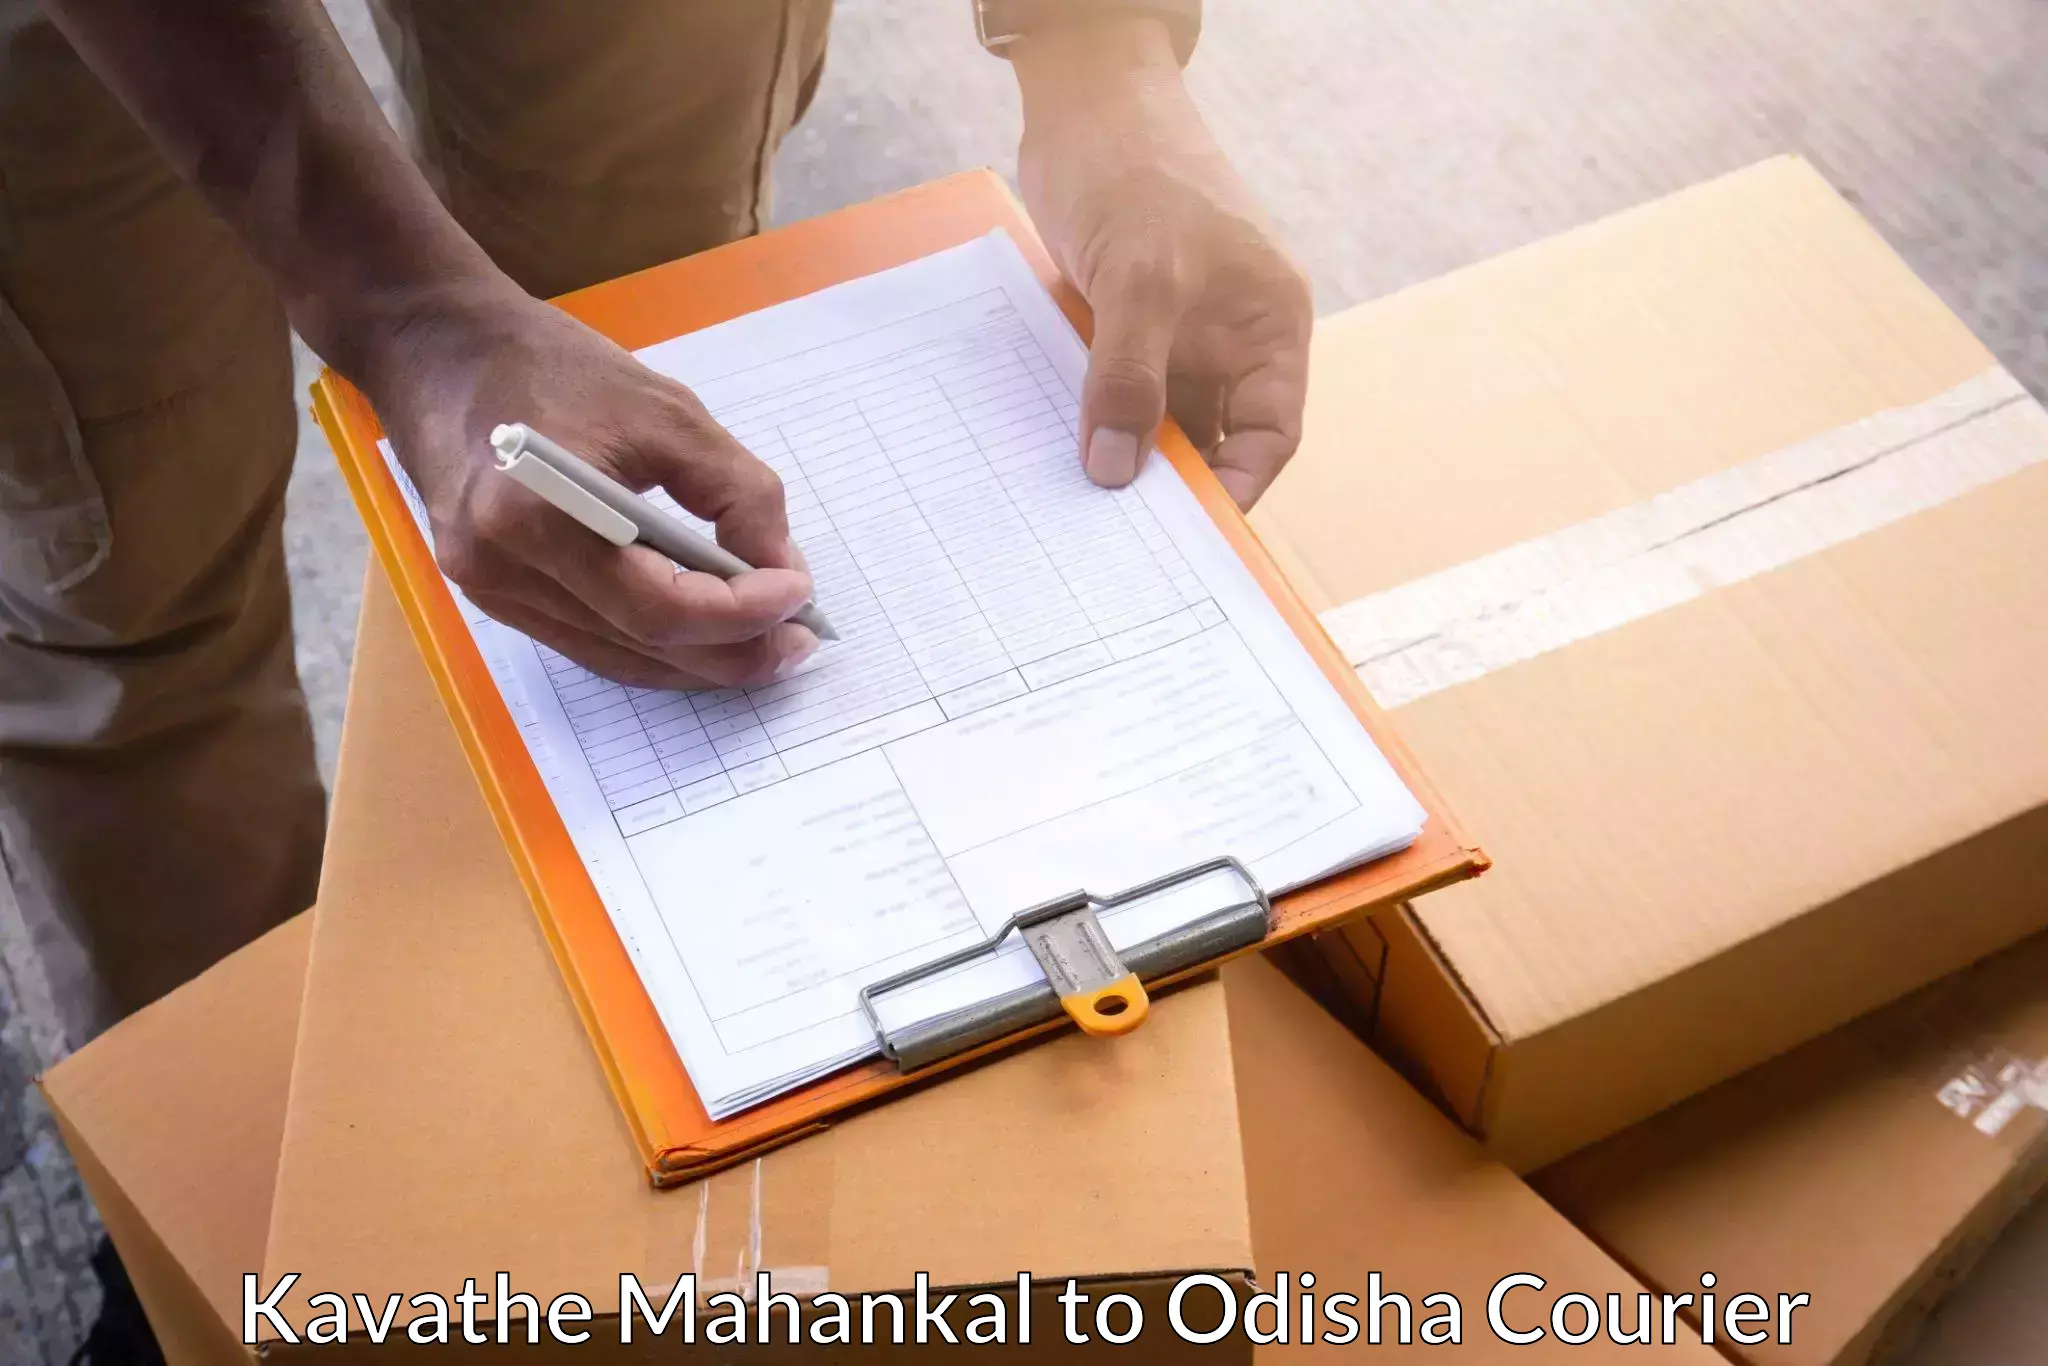 Courier service comparison Kavathe Mahankal to Keonjhar